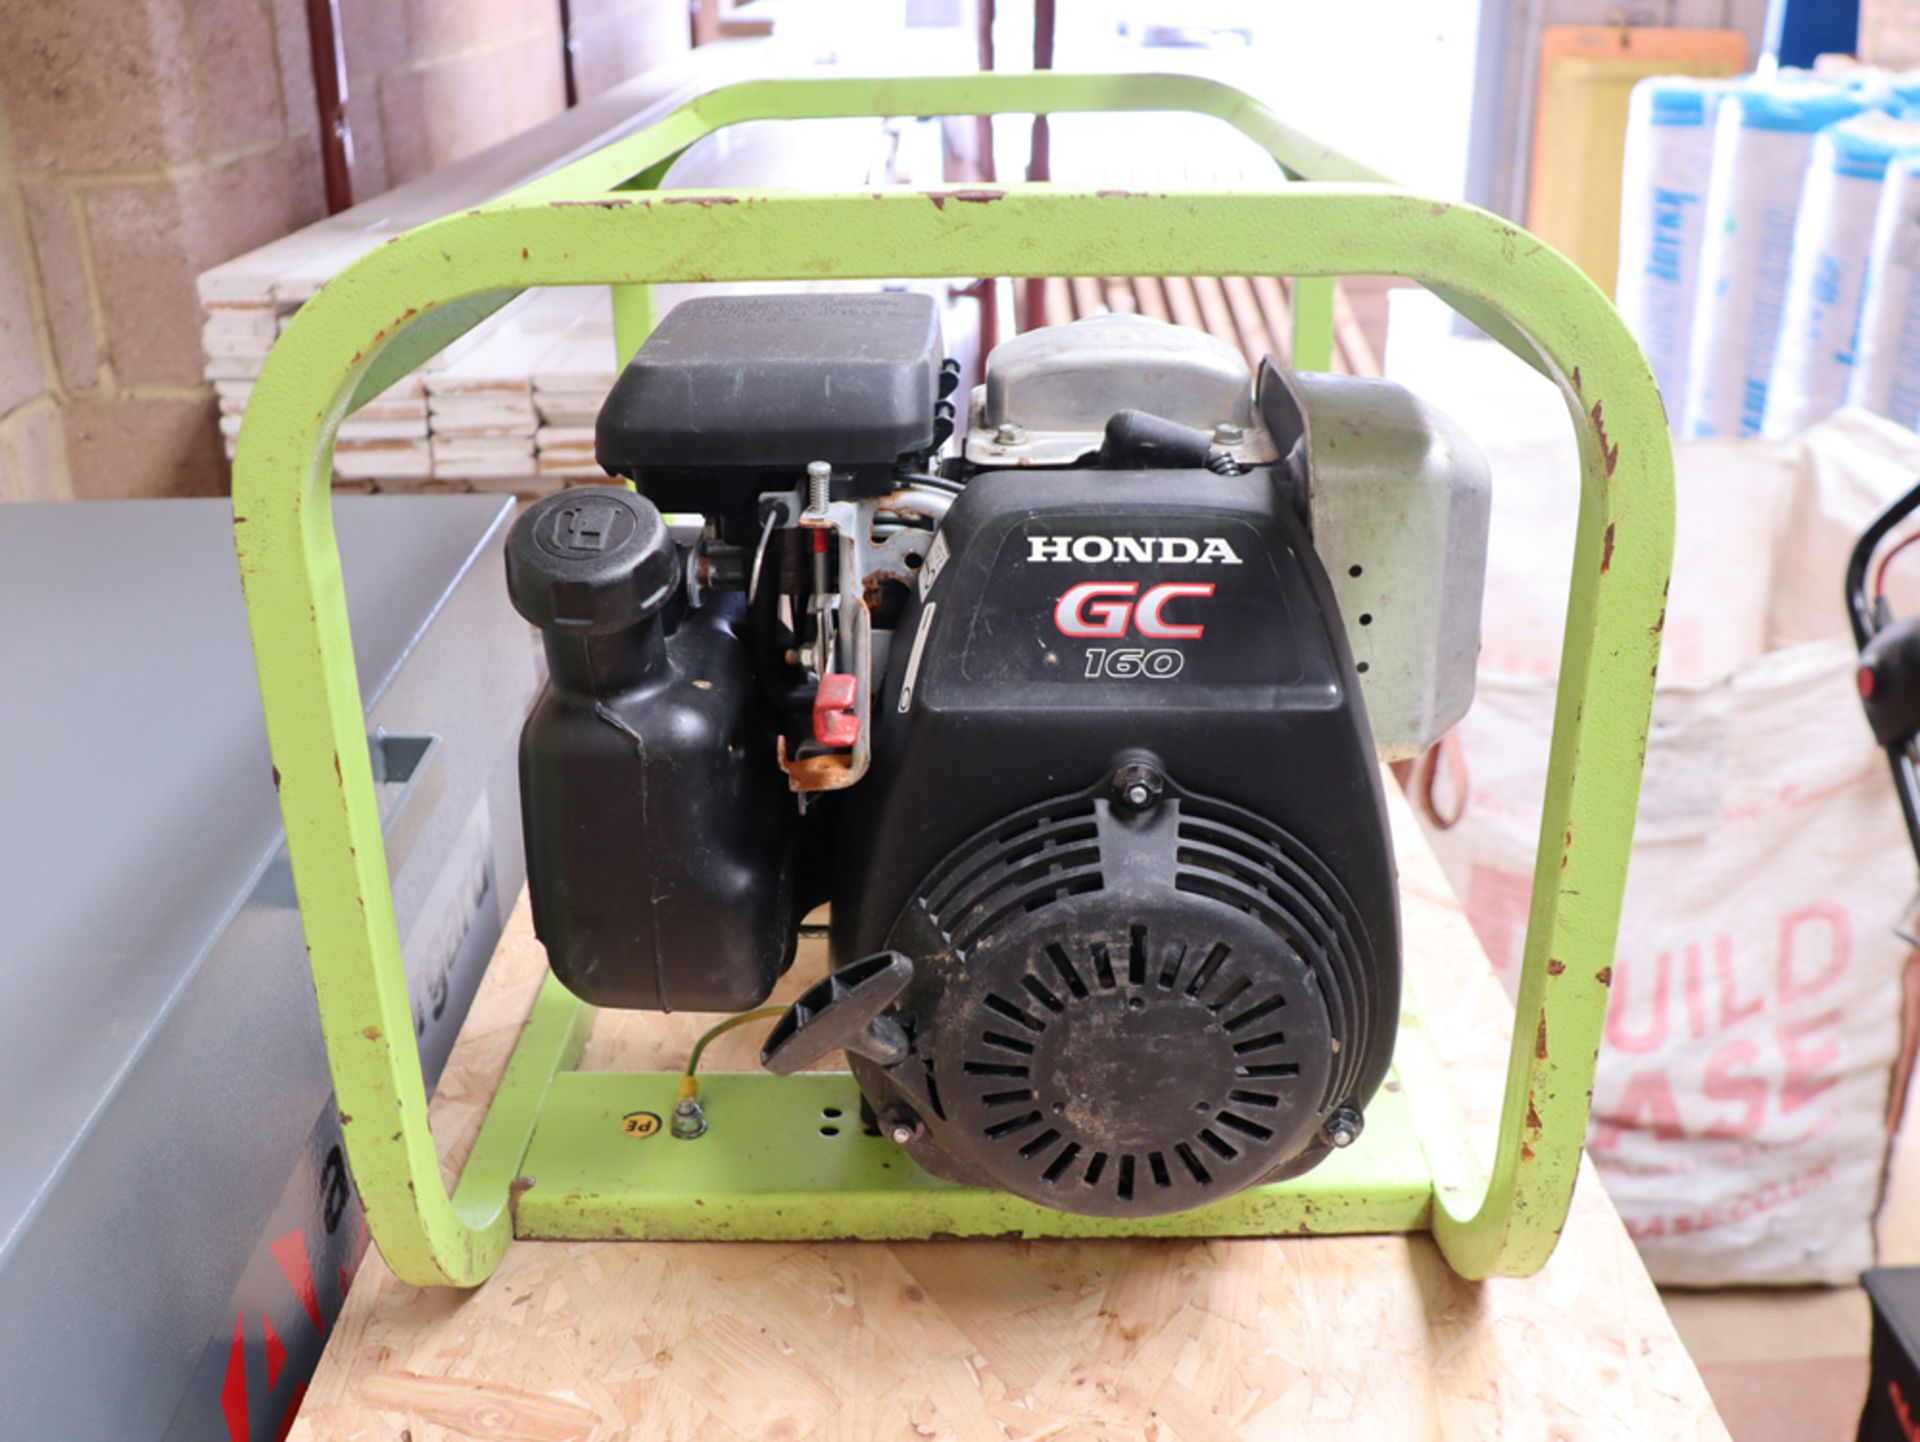 Pramac model: S15W-75 Honda GC 160cc petrol engine generator - Image 3 of 3